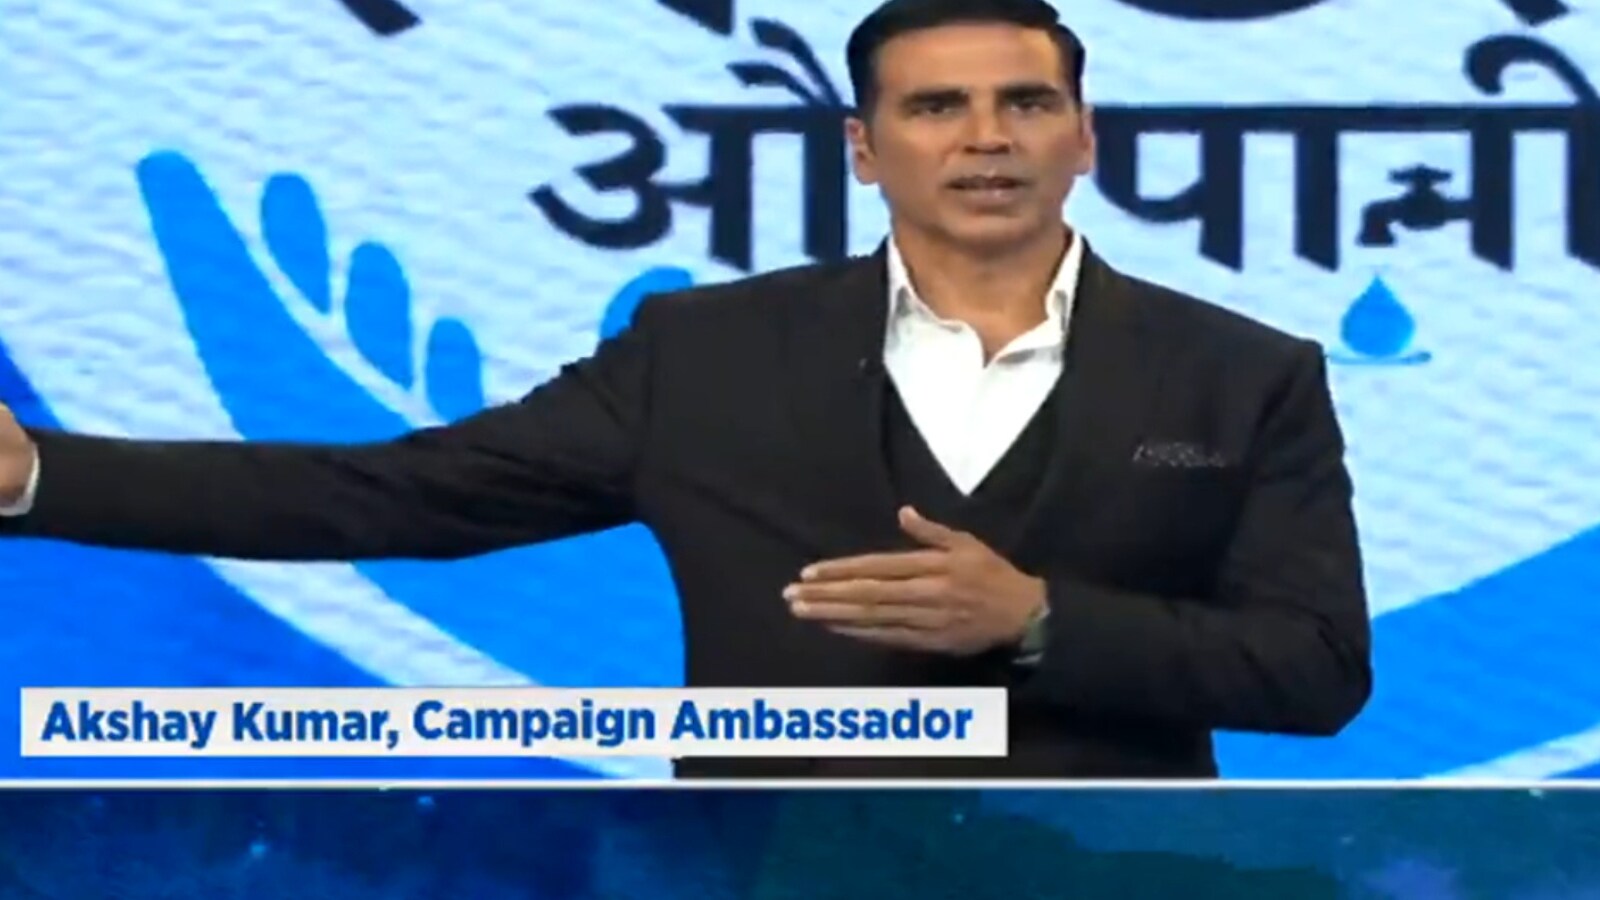 Harpic launches new campaign with brand ambassador Akshay Kumar